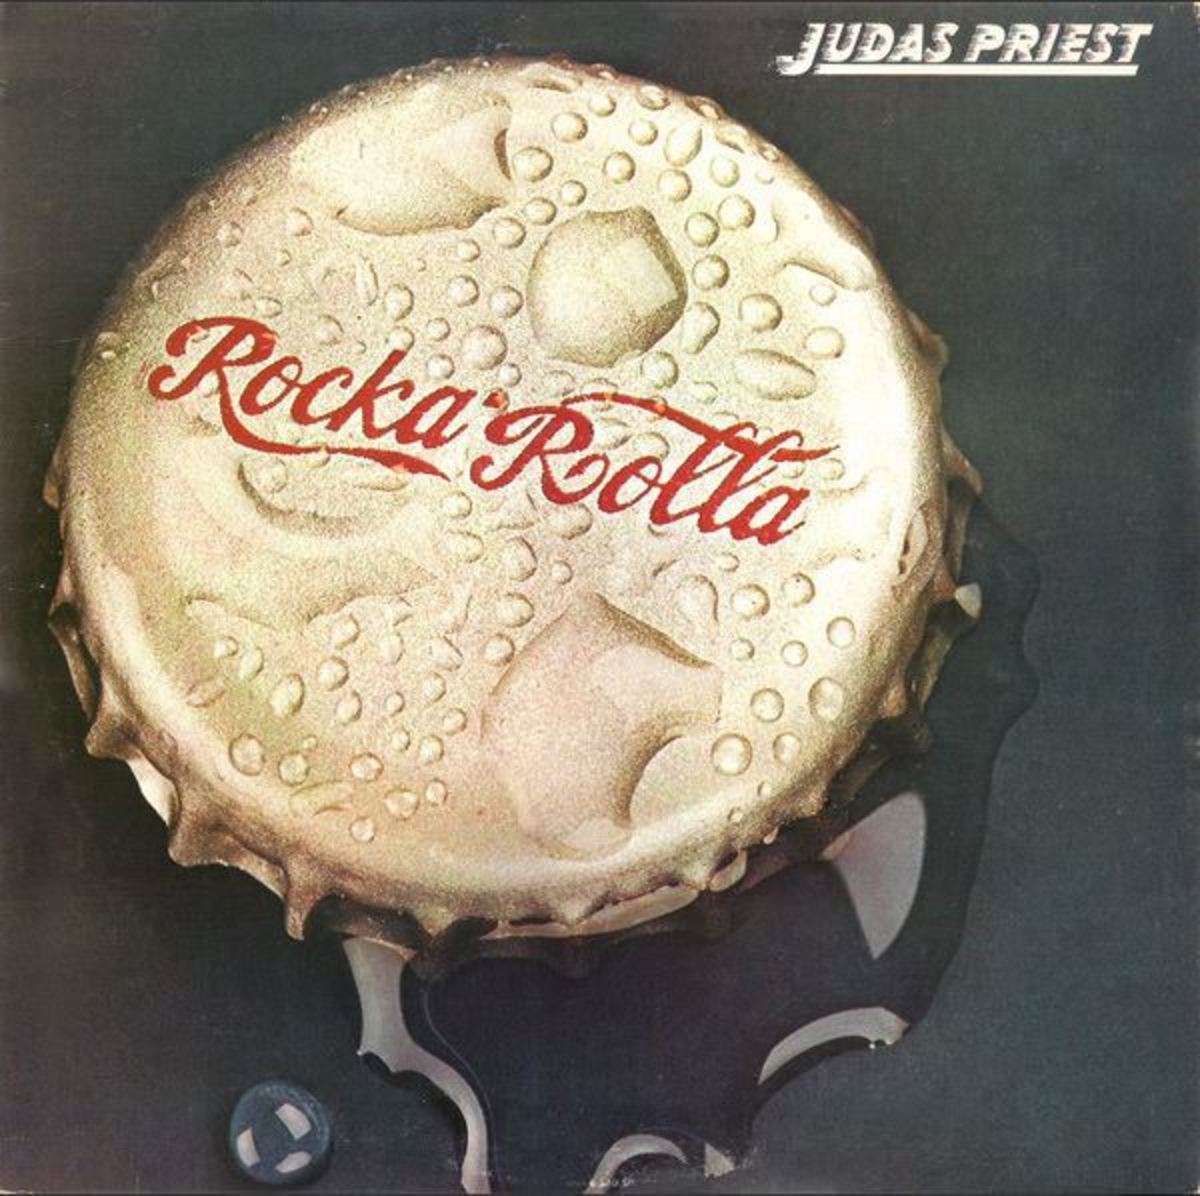 Original "Rocka Rolla" album cover